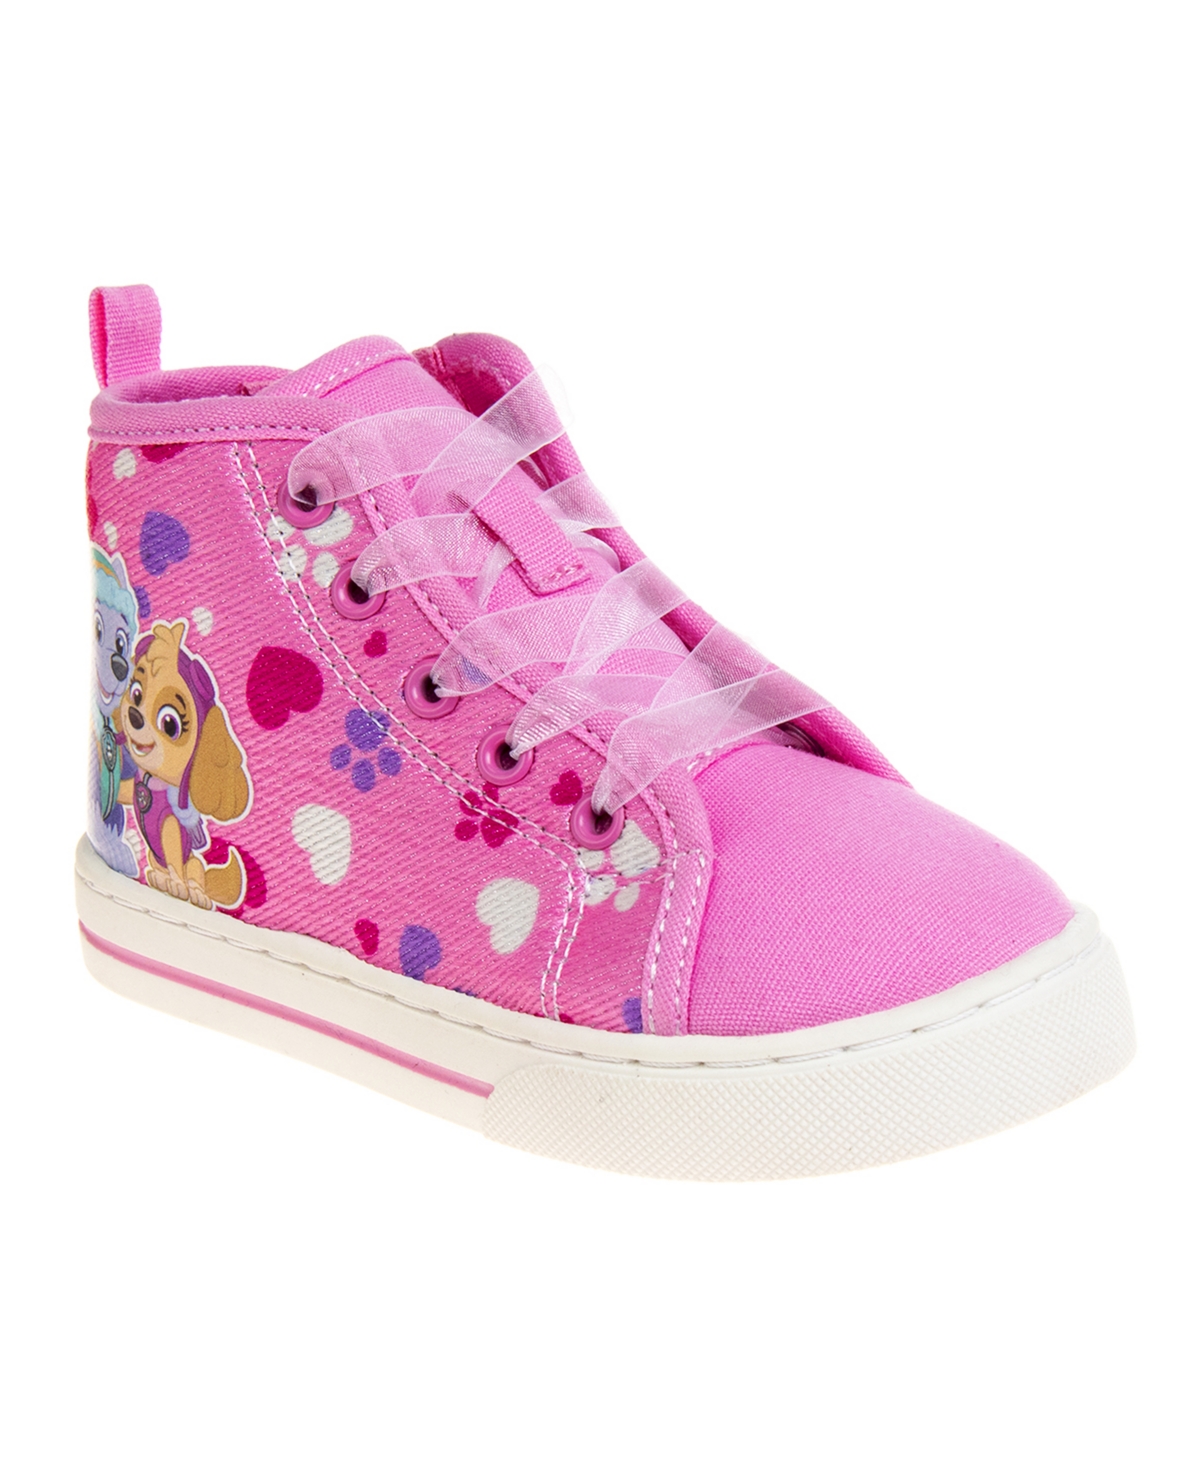 Nickelodeon Kids' Toddler Girls Paw Patrol High-top Sneakers In Pink